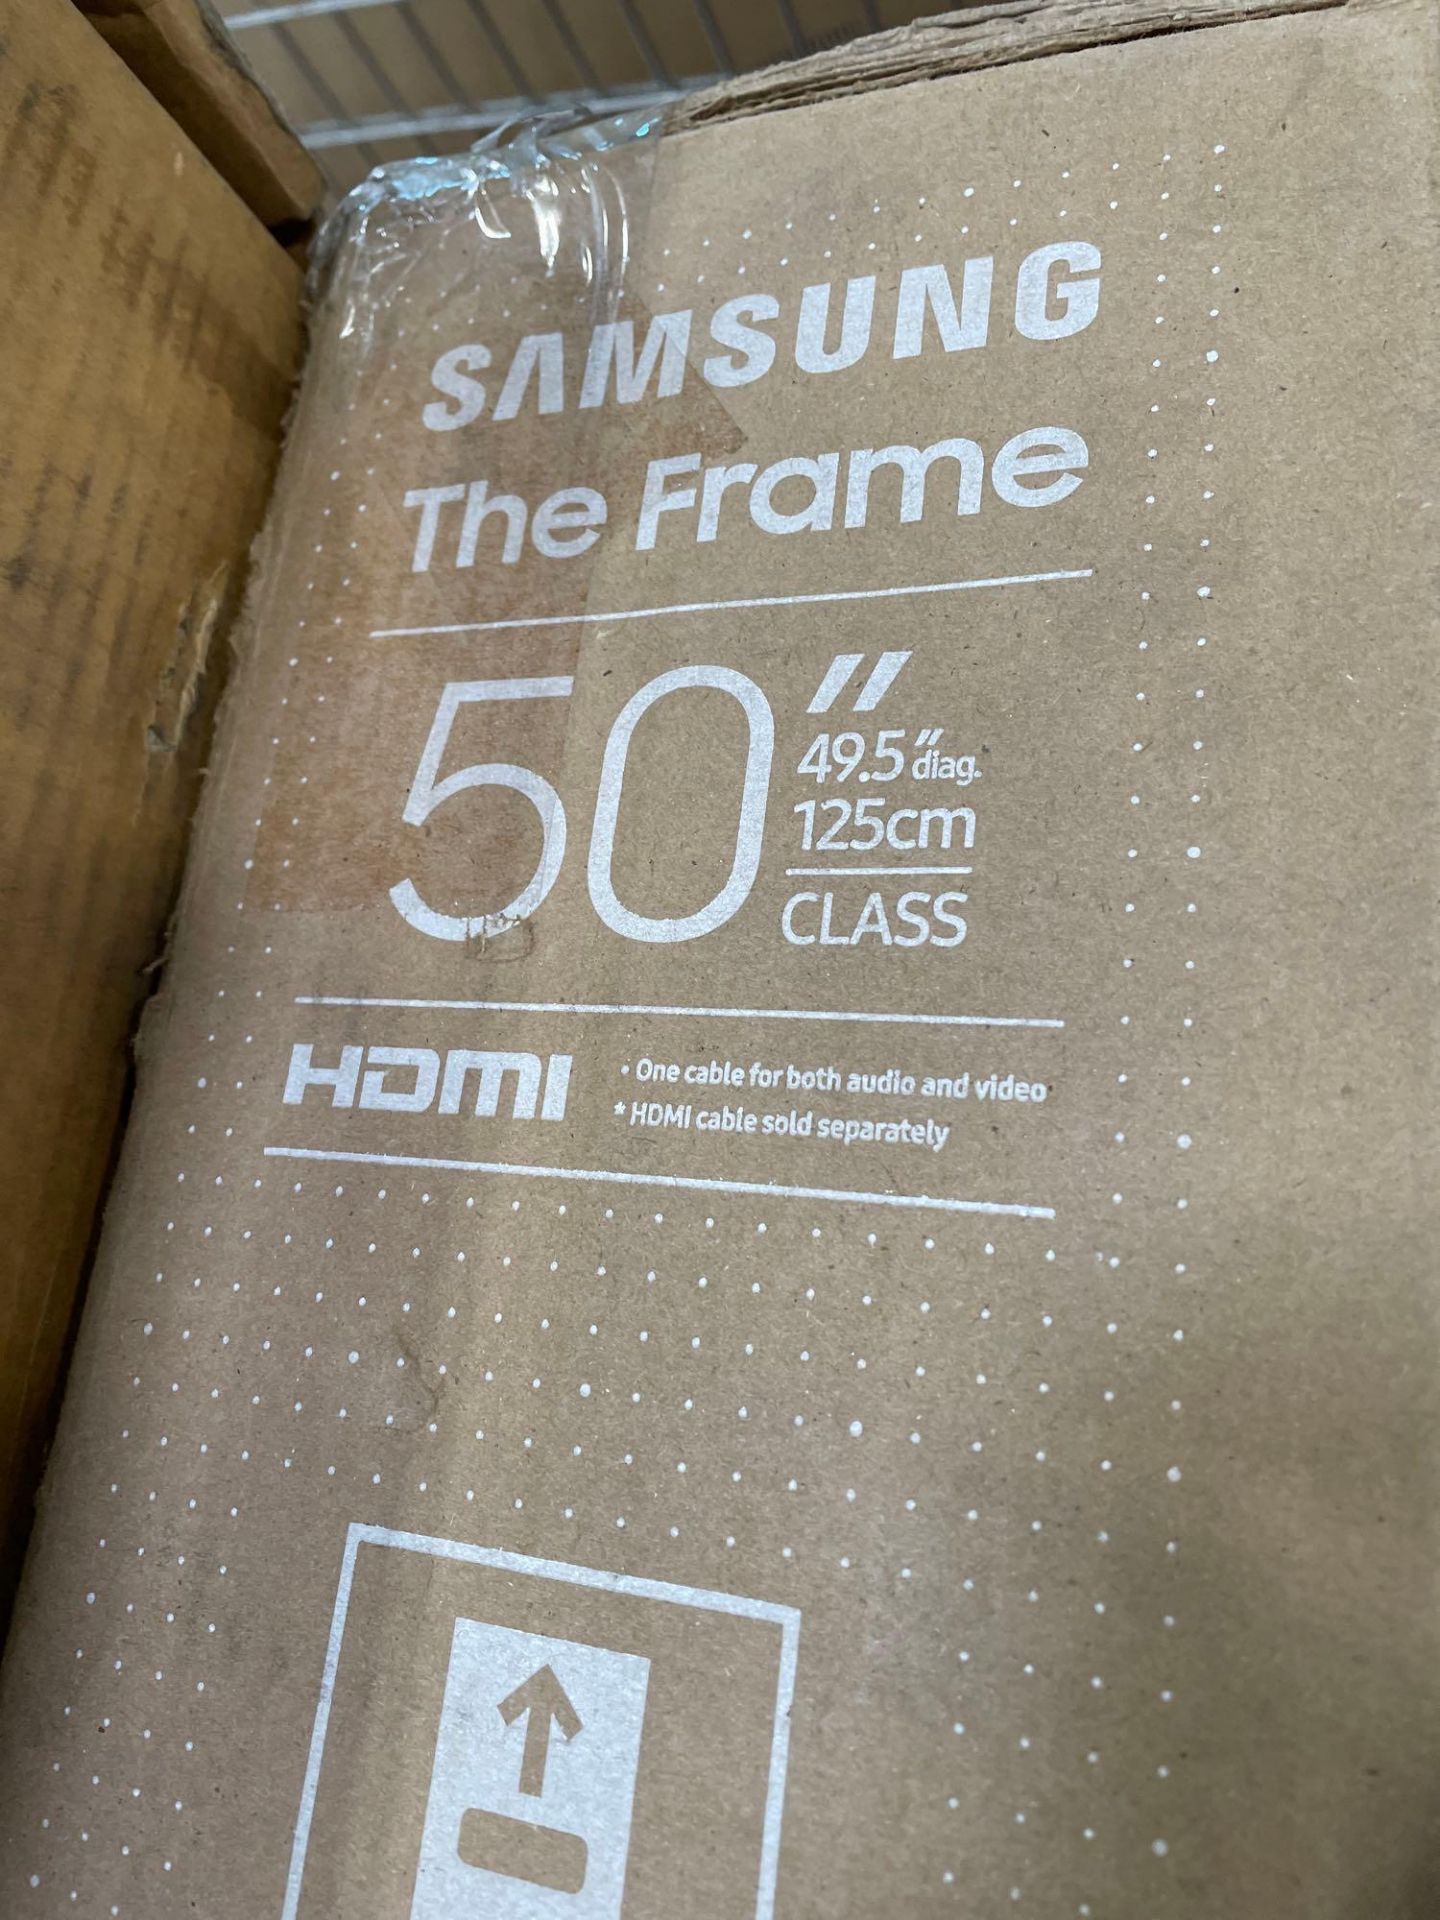 Samsung 50" The Frame TV - Image 8 of 11